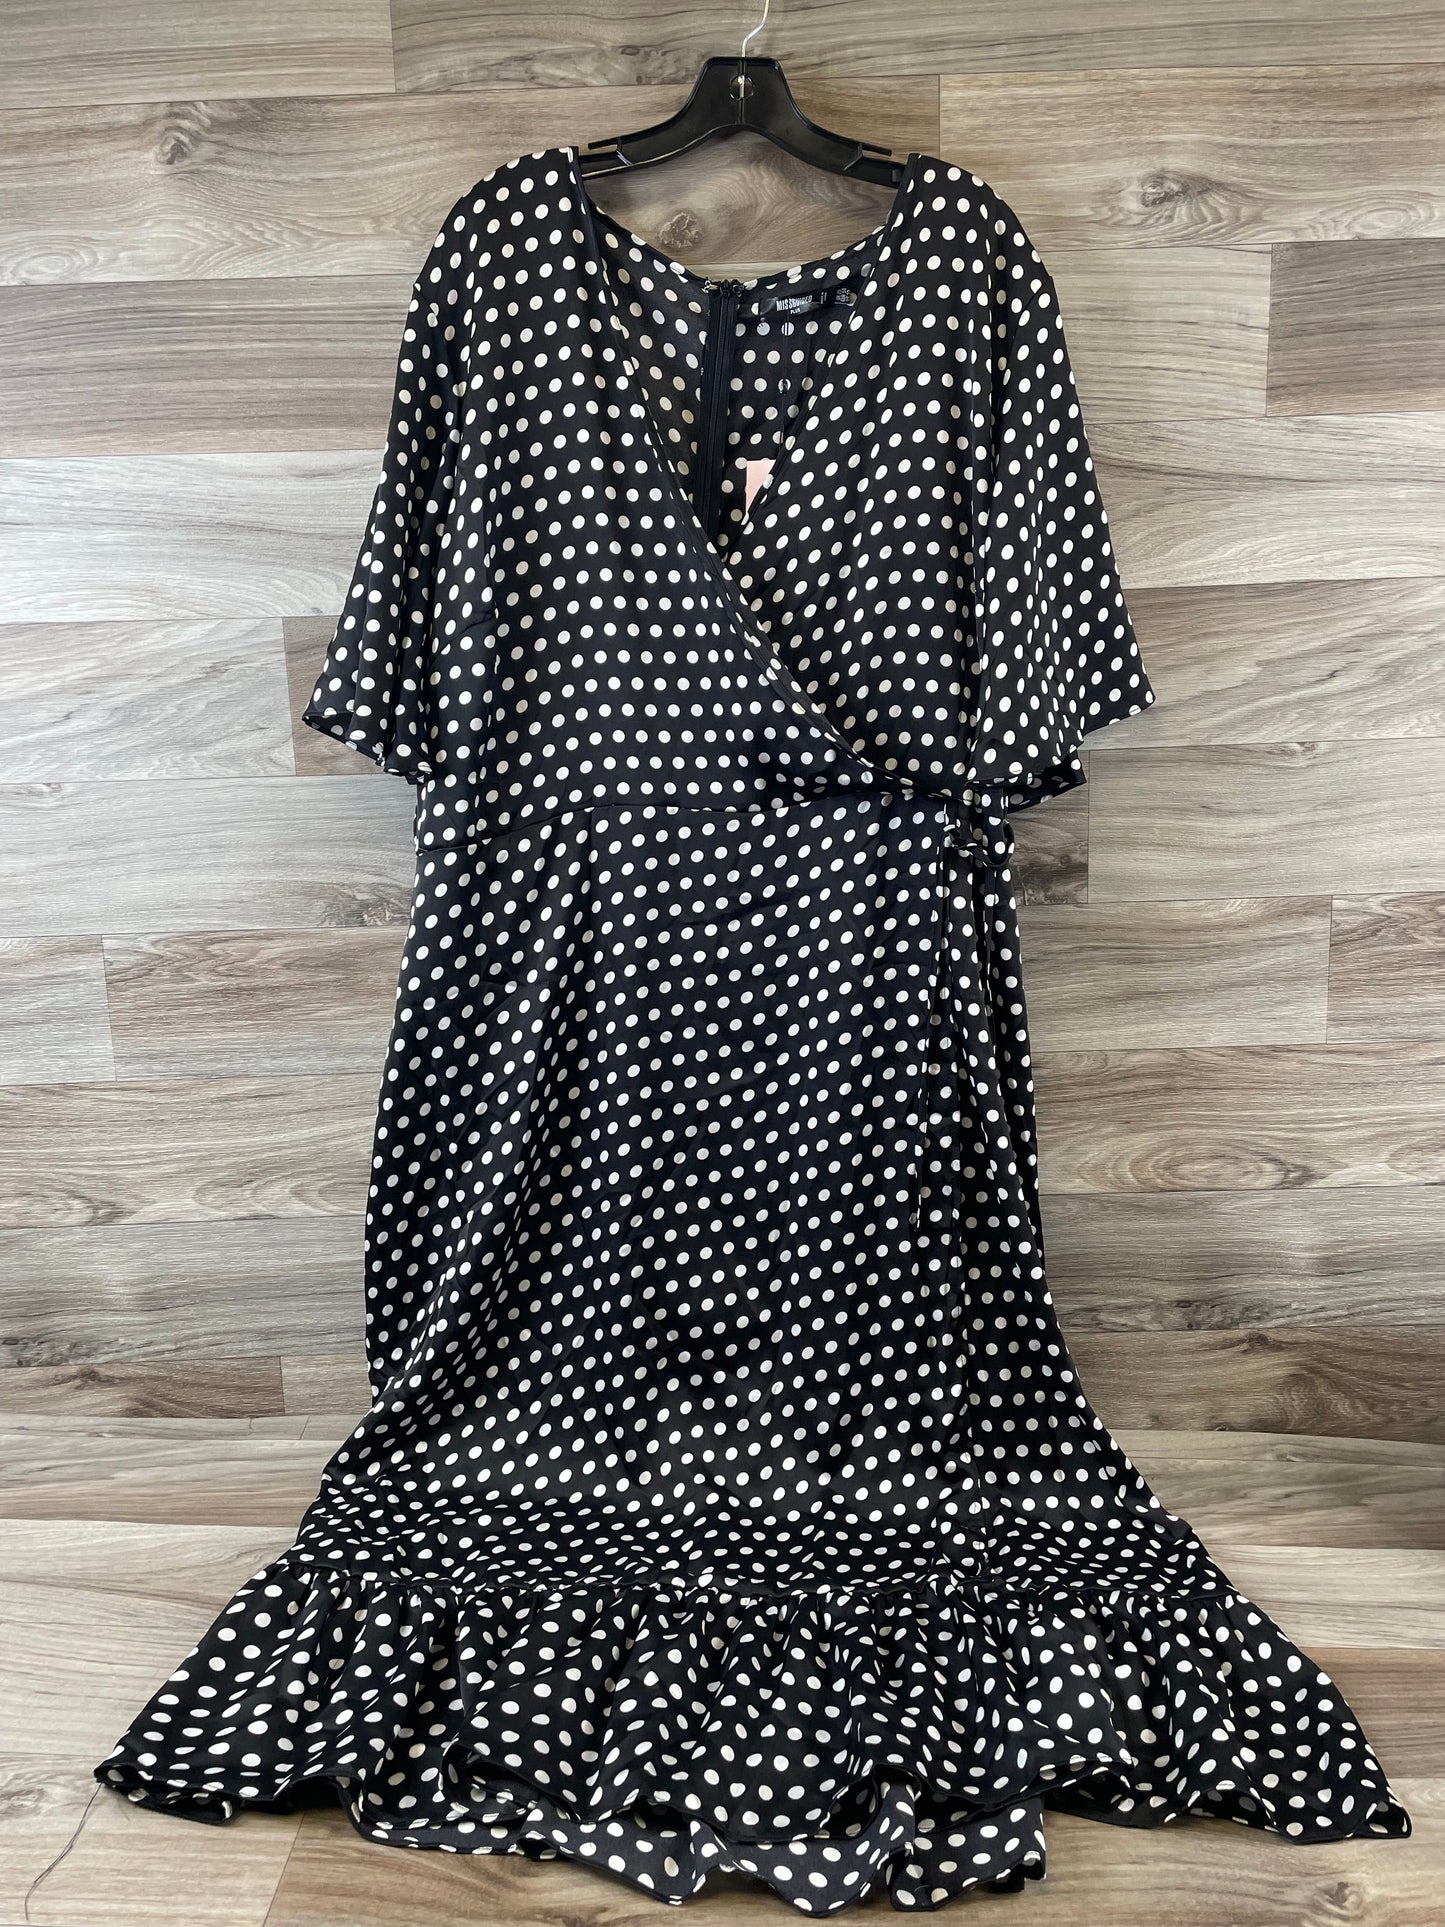 Polkadot Pattern Dress Casual Maxi Missguided, Size 3x